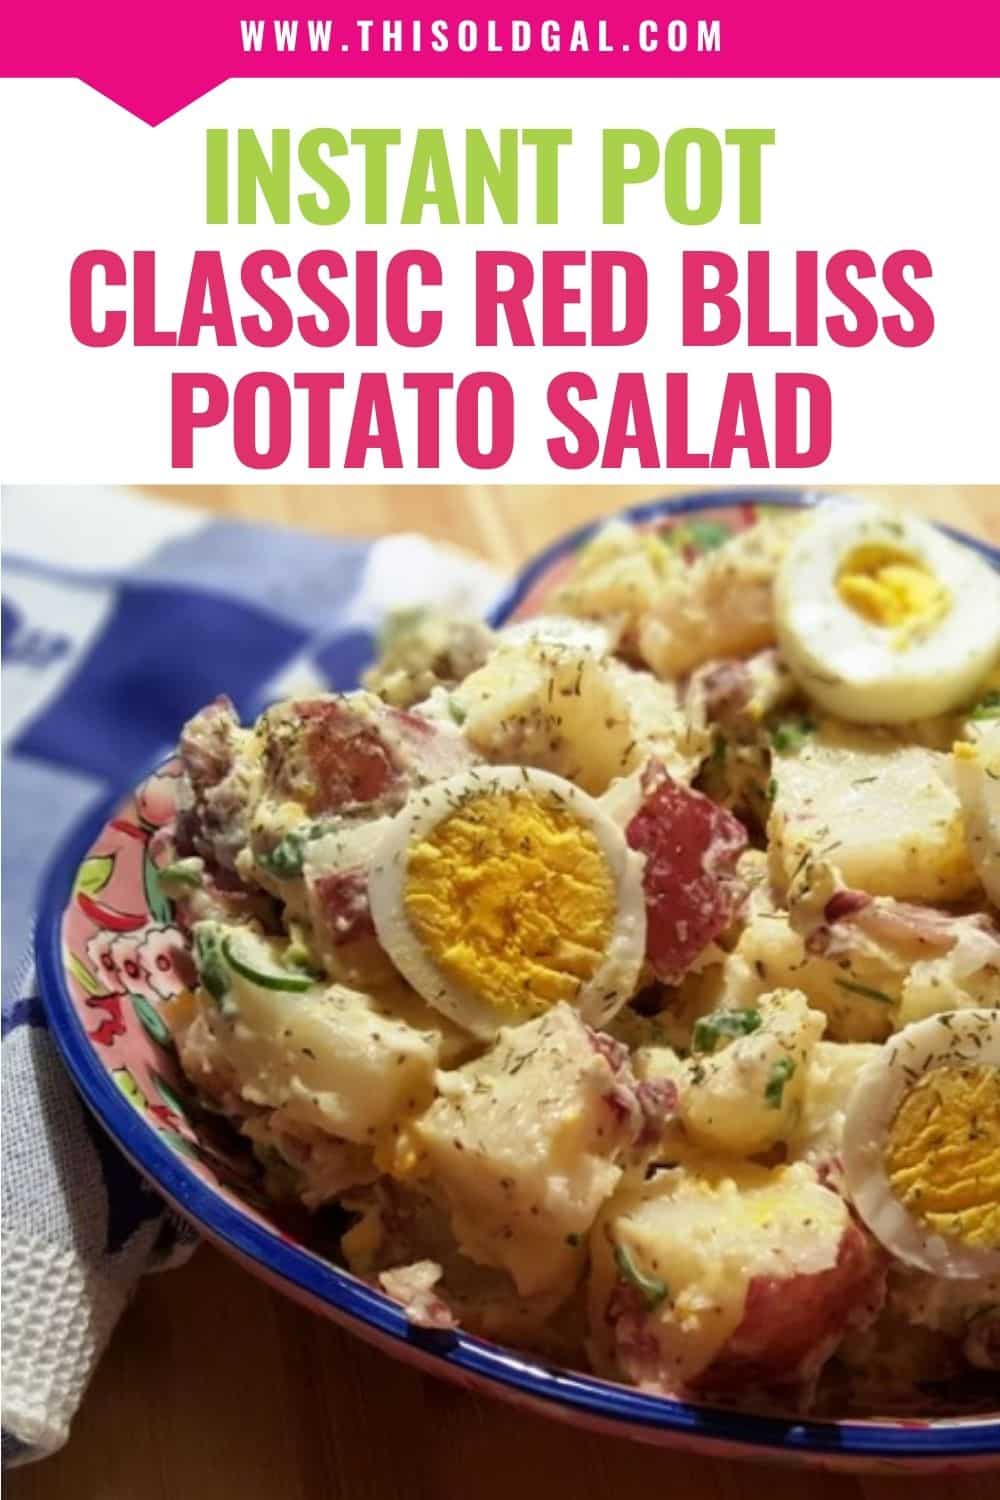 Instant Pot Classic Red Bliss Potato Salad